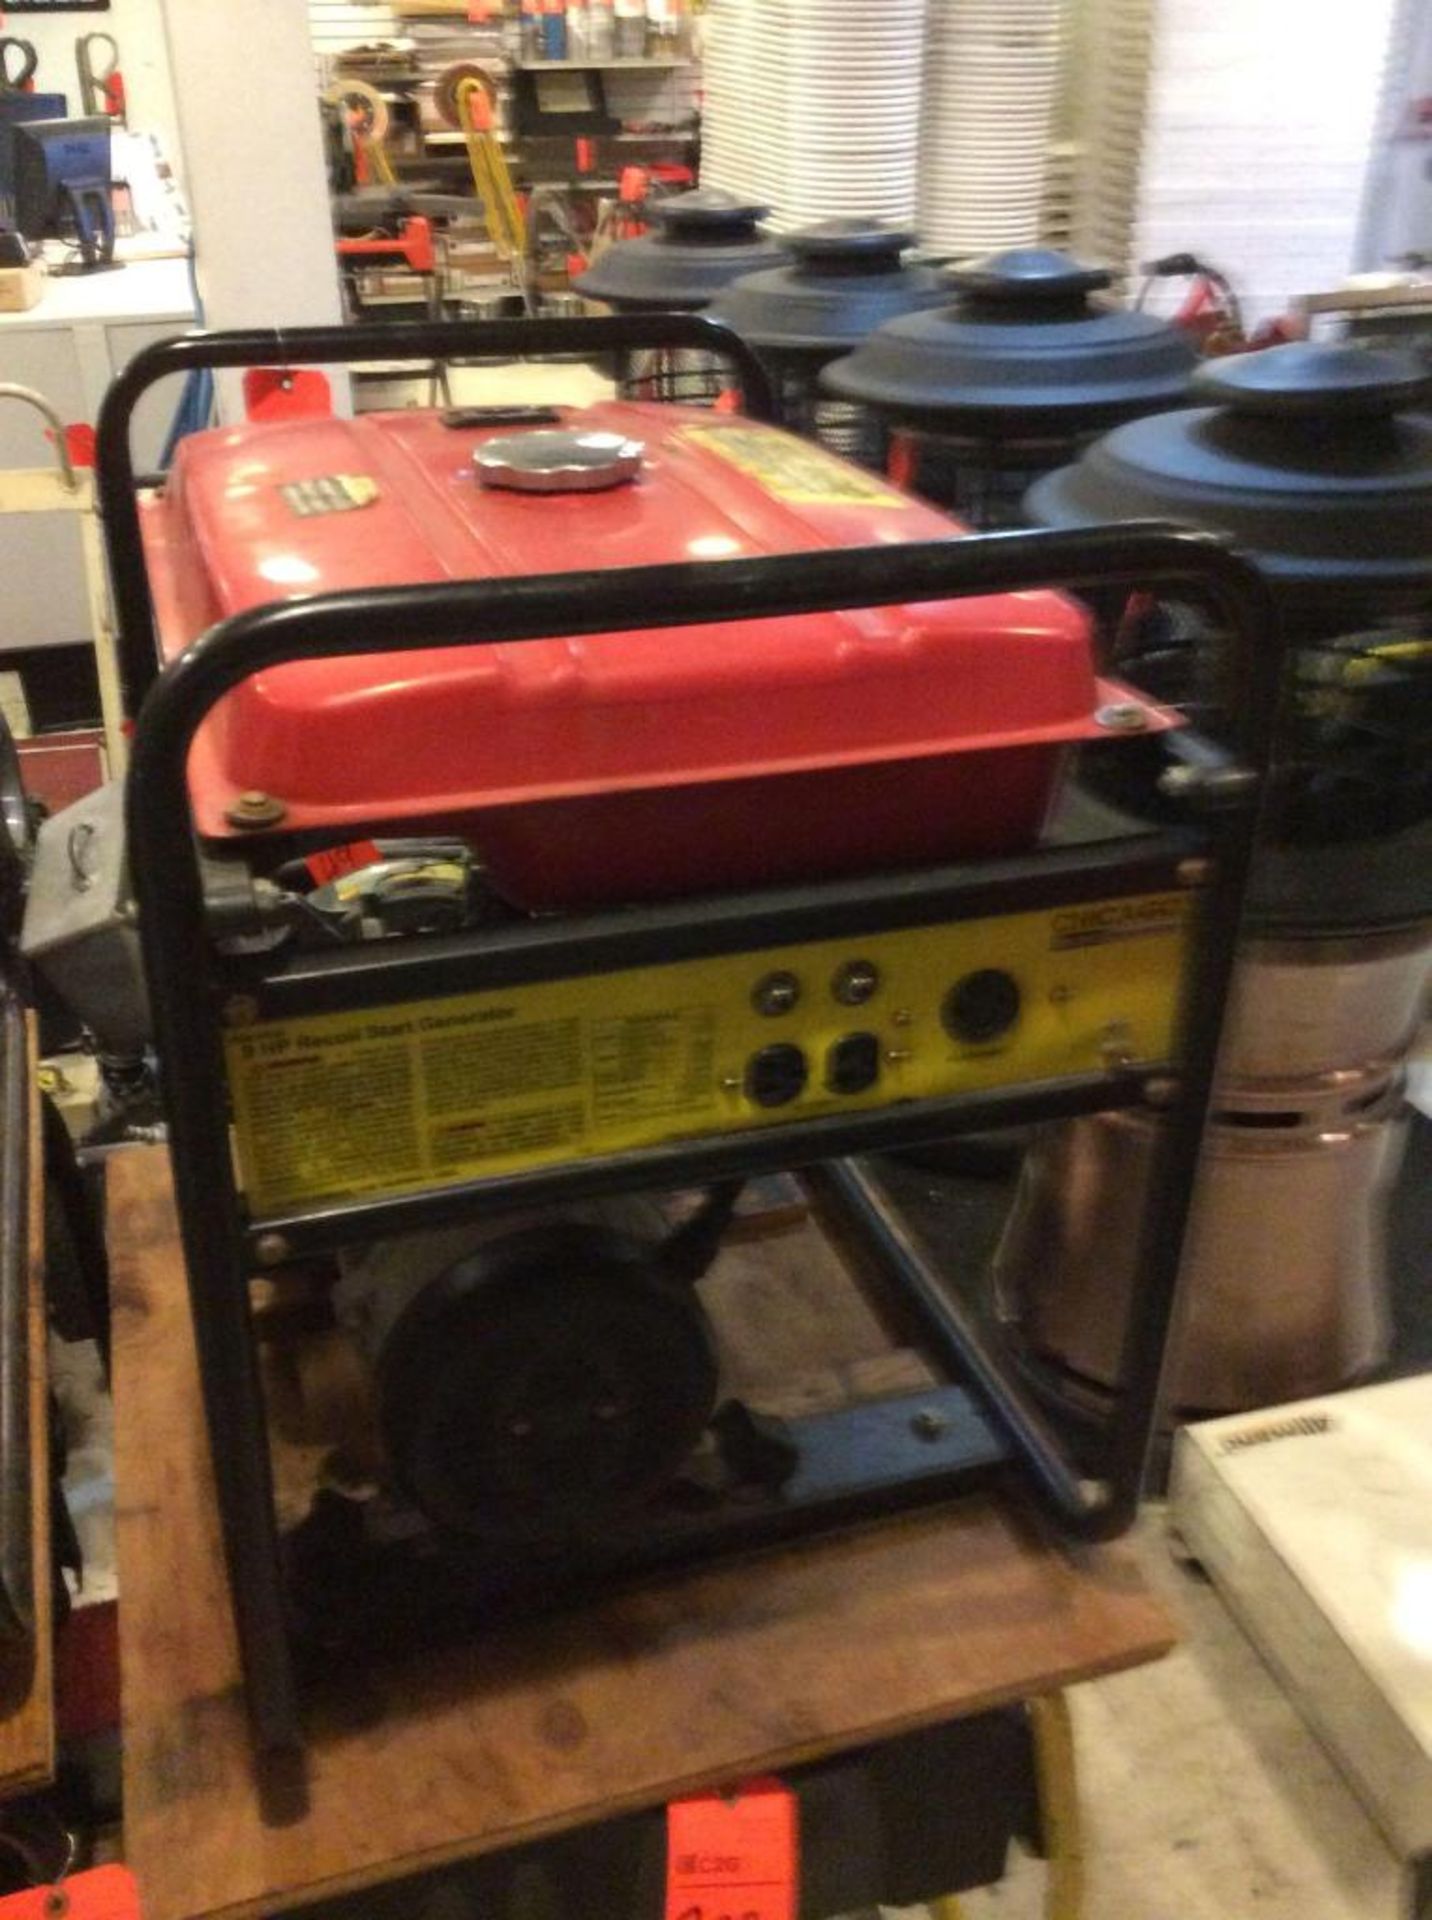 Chicago, MN 90236, gas powered generator, 9 hp